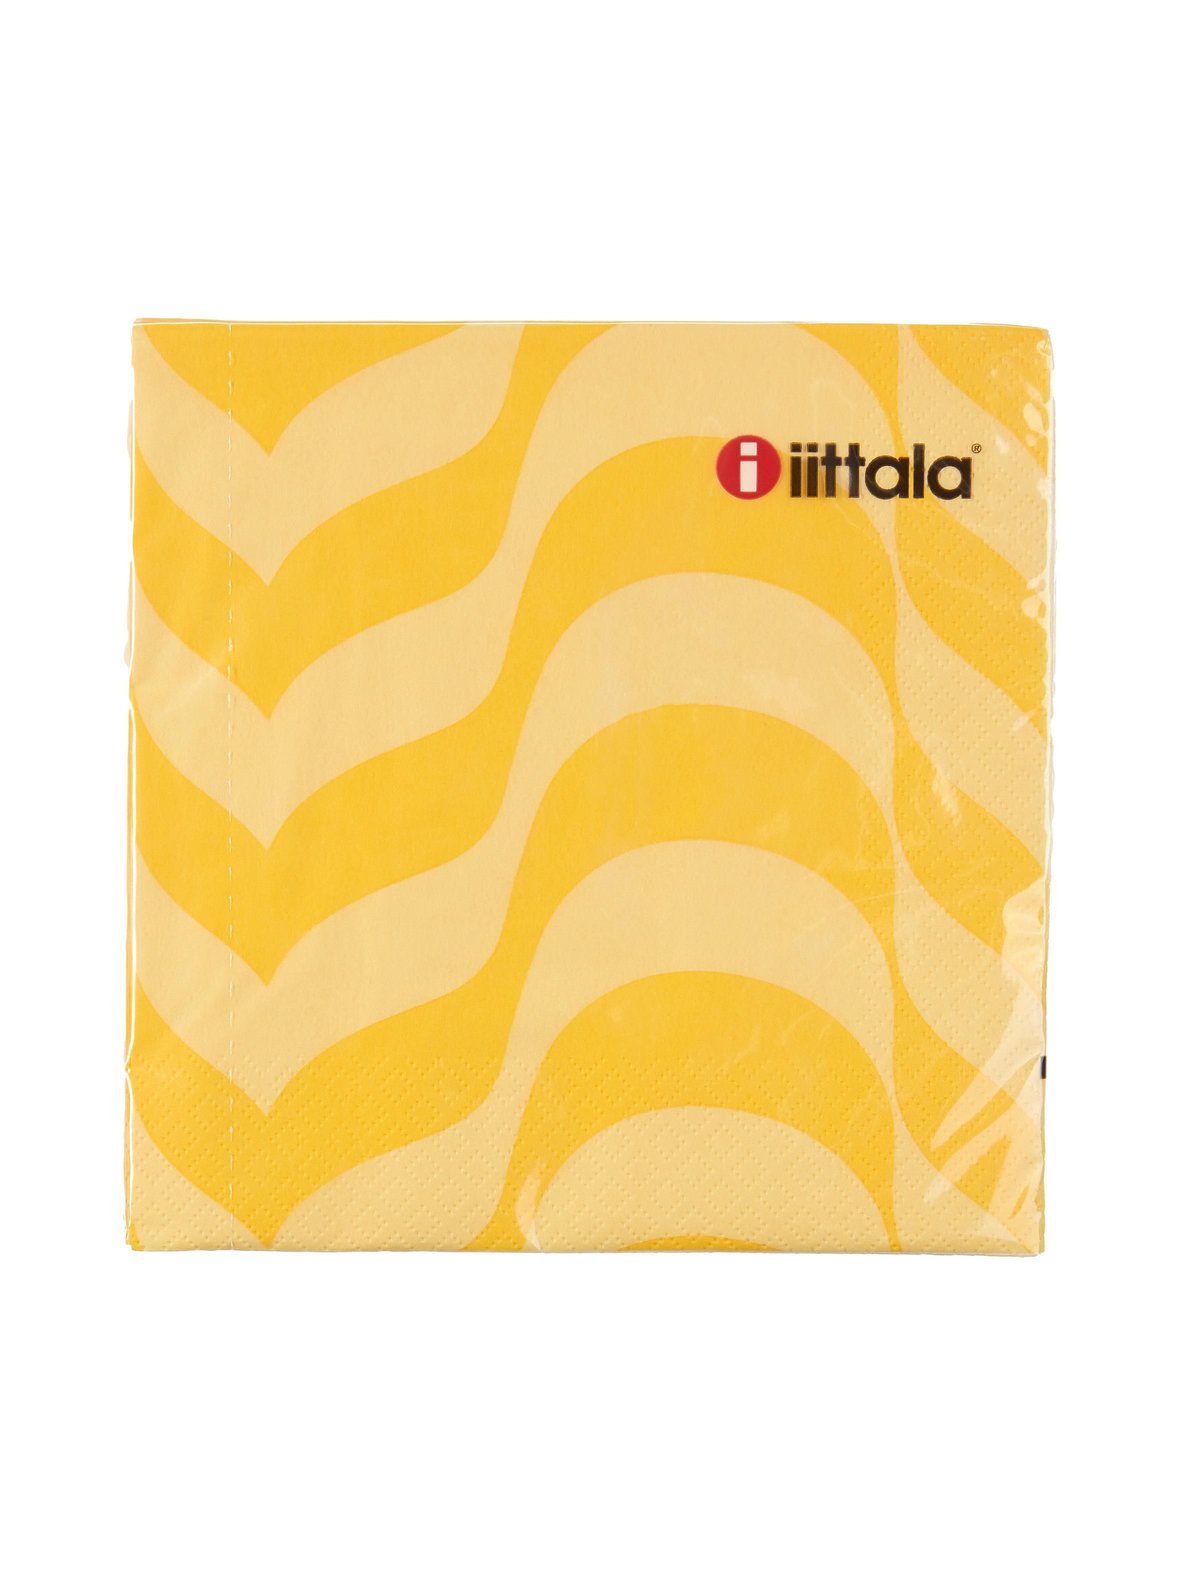 Iittala Aalto-servetti 33 x cm, 20 kpl